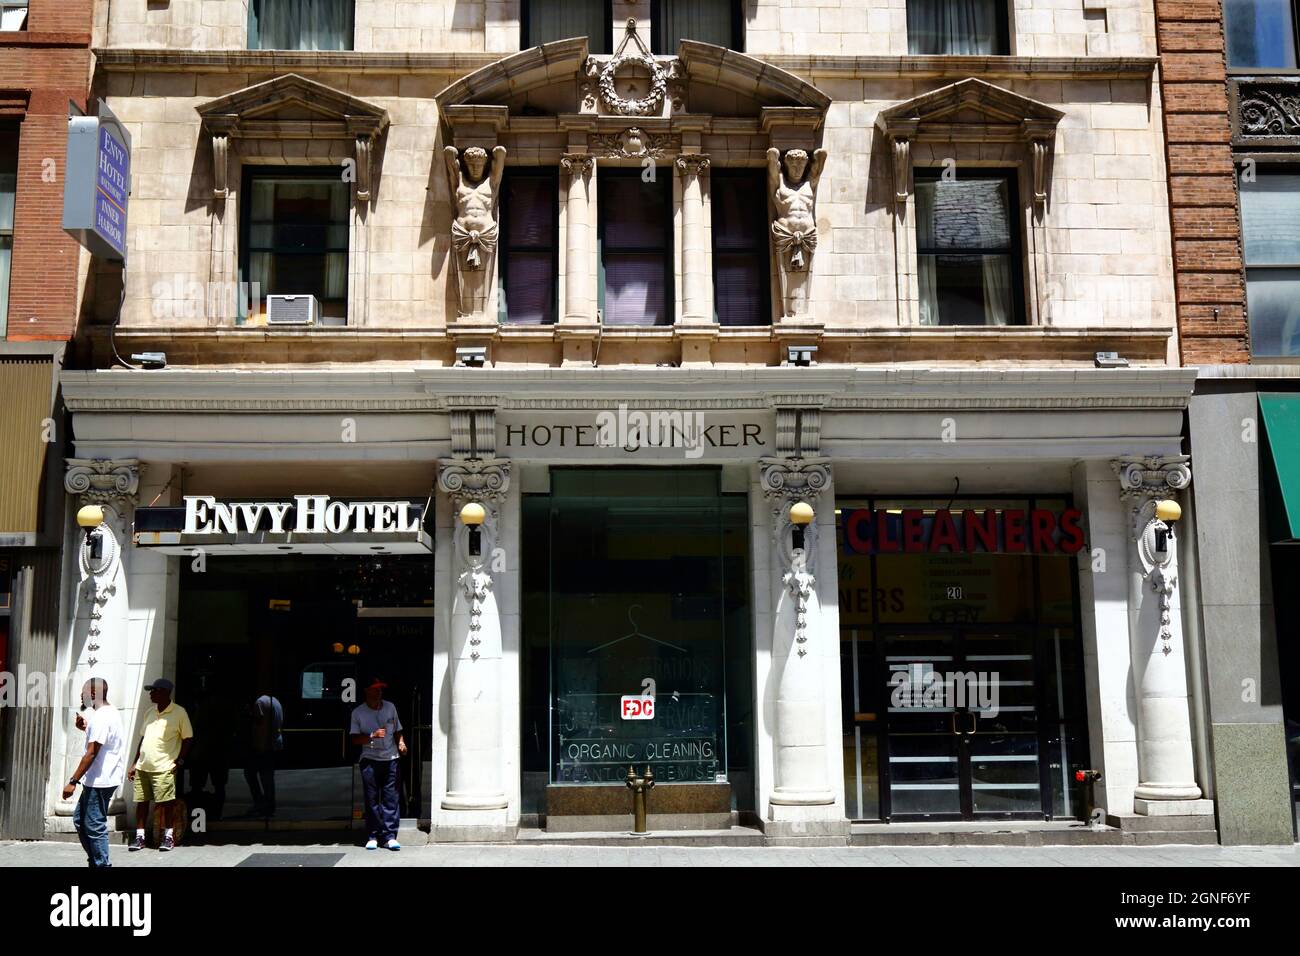 Fachada de entrada de Envy Hotel and Hotel Junker, E Fayette St, Baltimore, Maryland, Estados Unidos Foto de stock